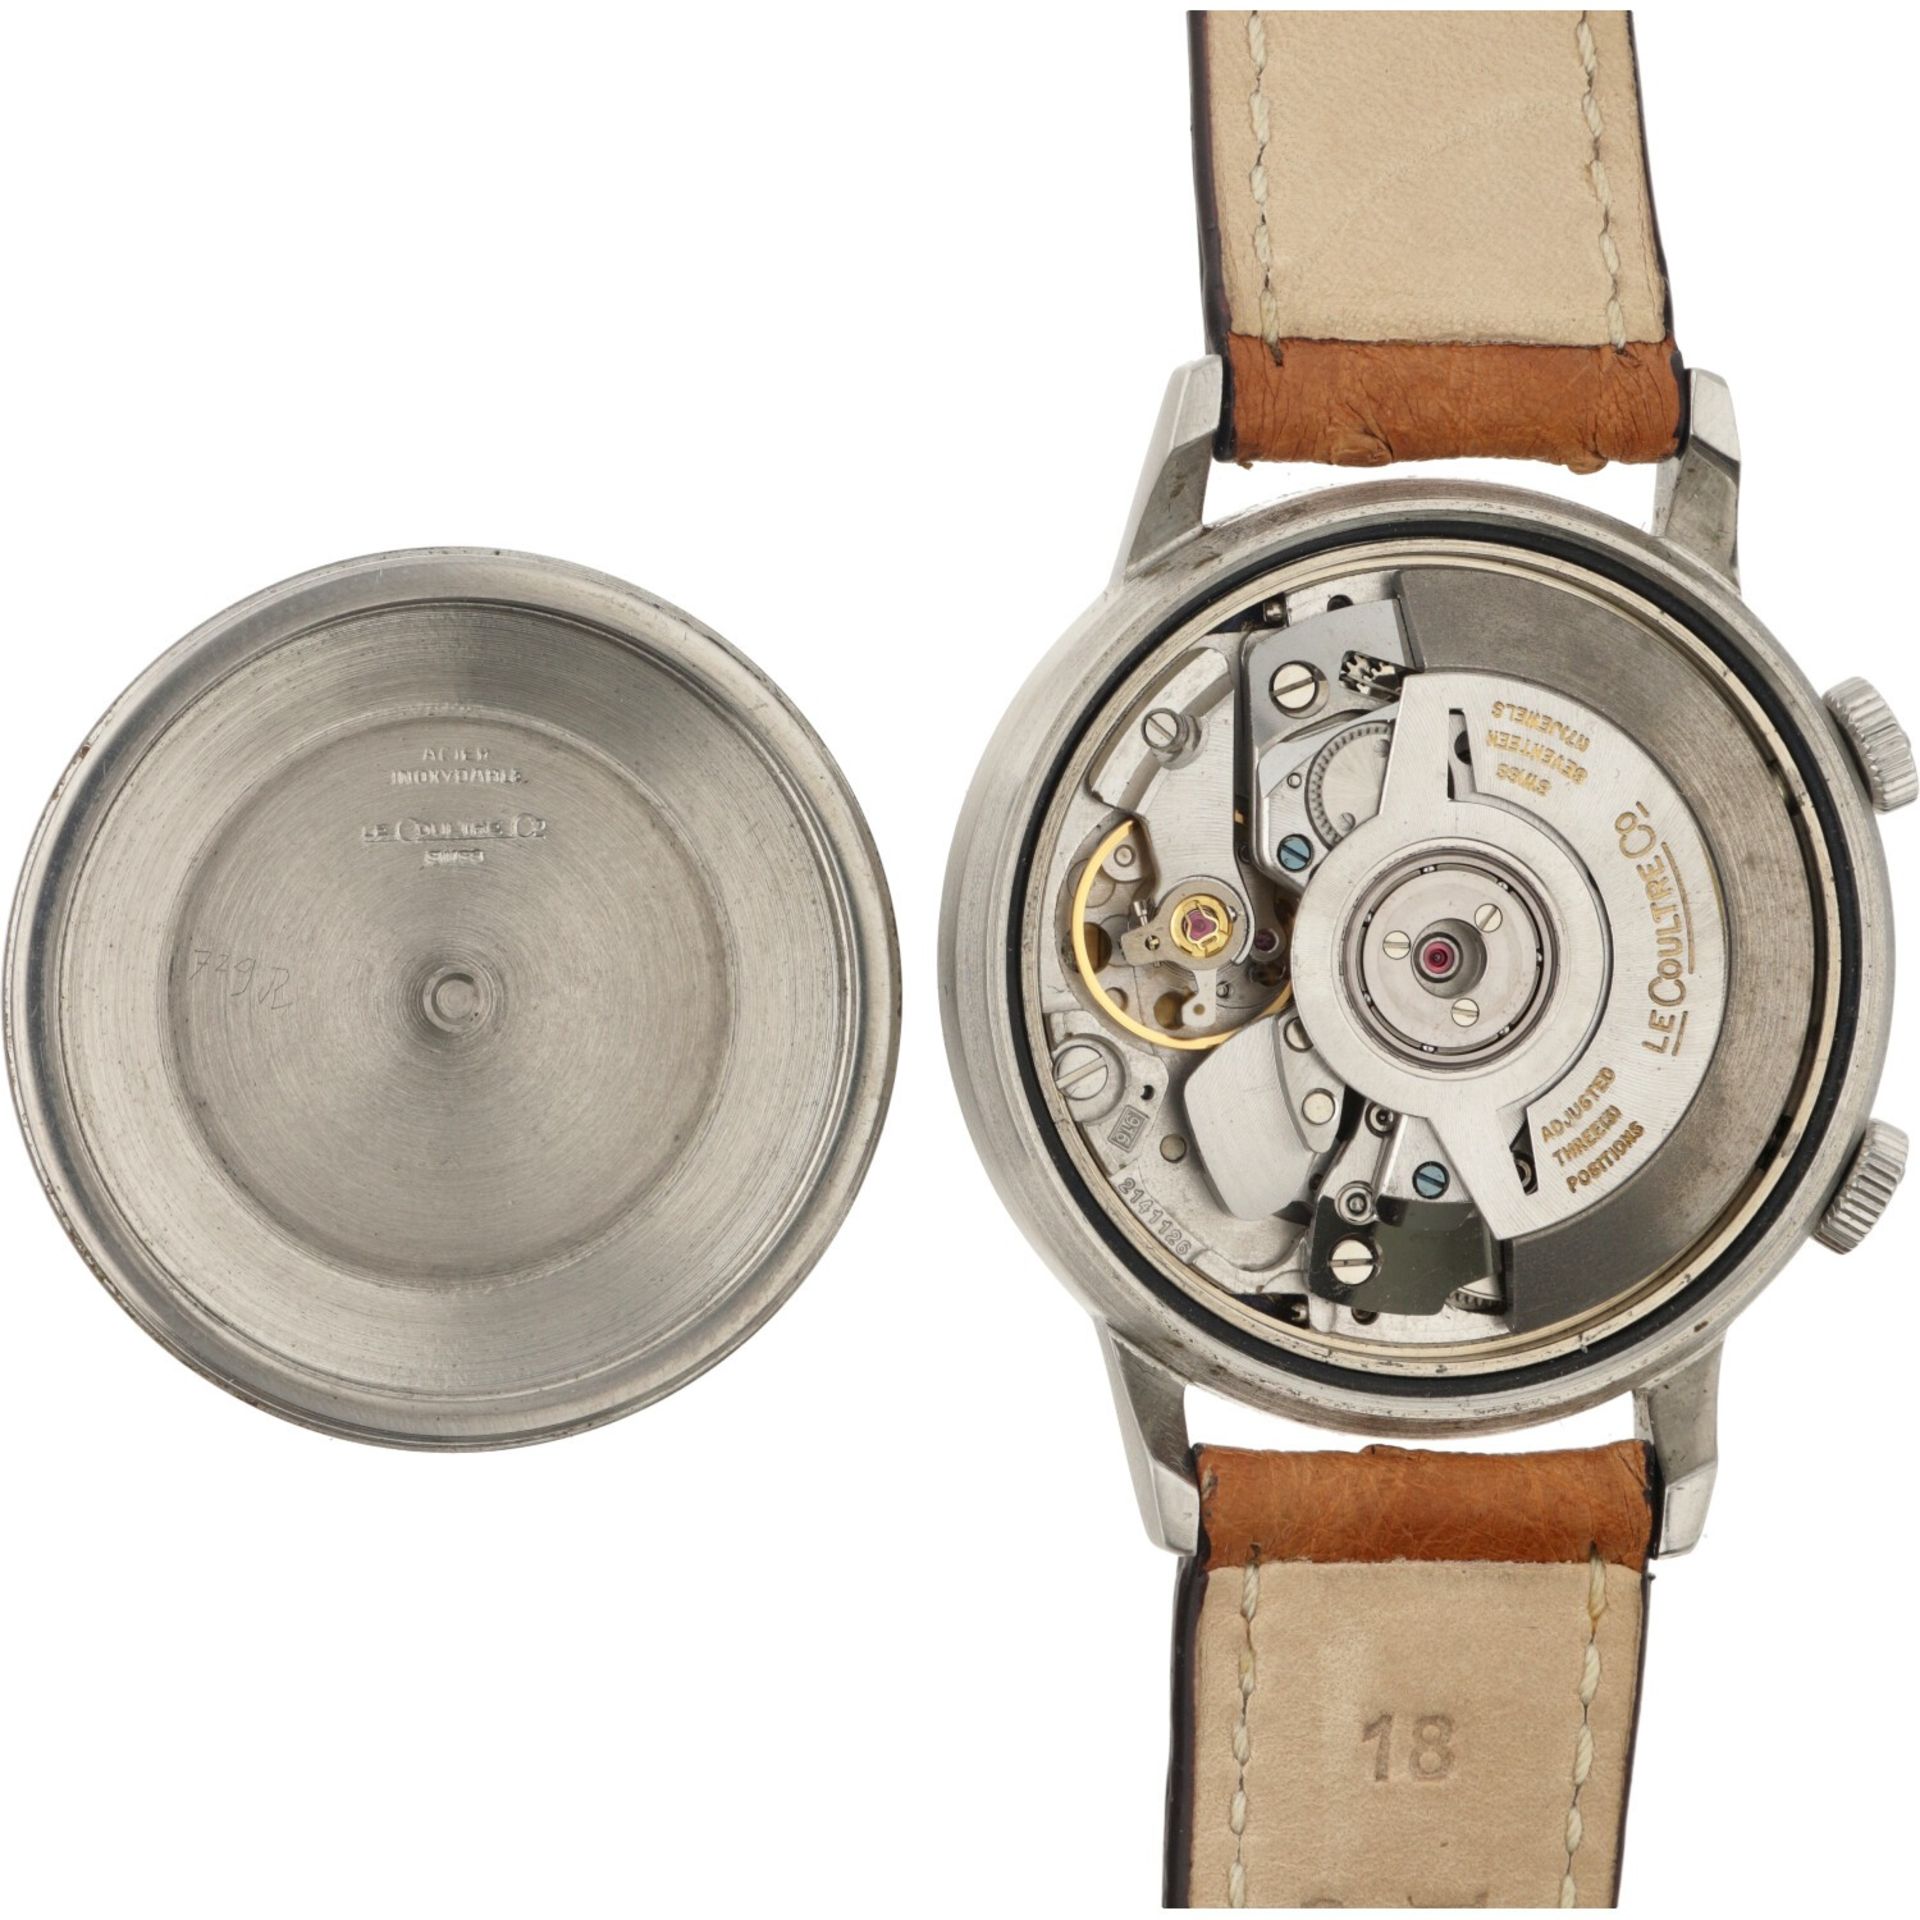 Jaeger-LeCoultre Memovox 875.42 Jumbo Cal. 916 Speedbeat - Men's watch - approx. 1970. - Image 8 of 9